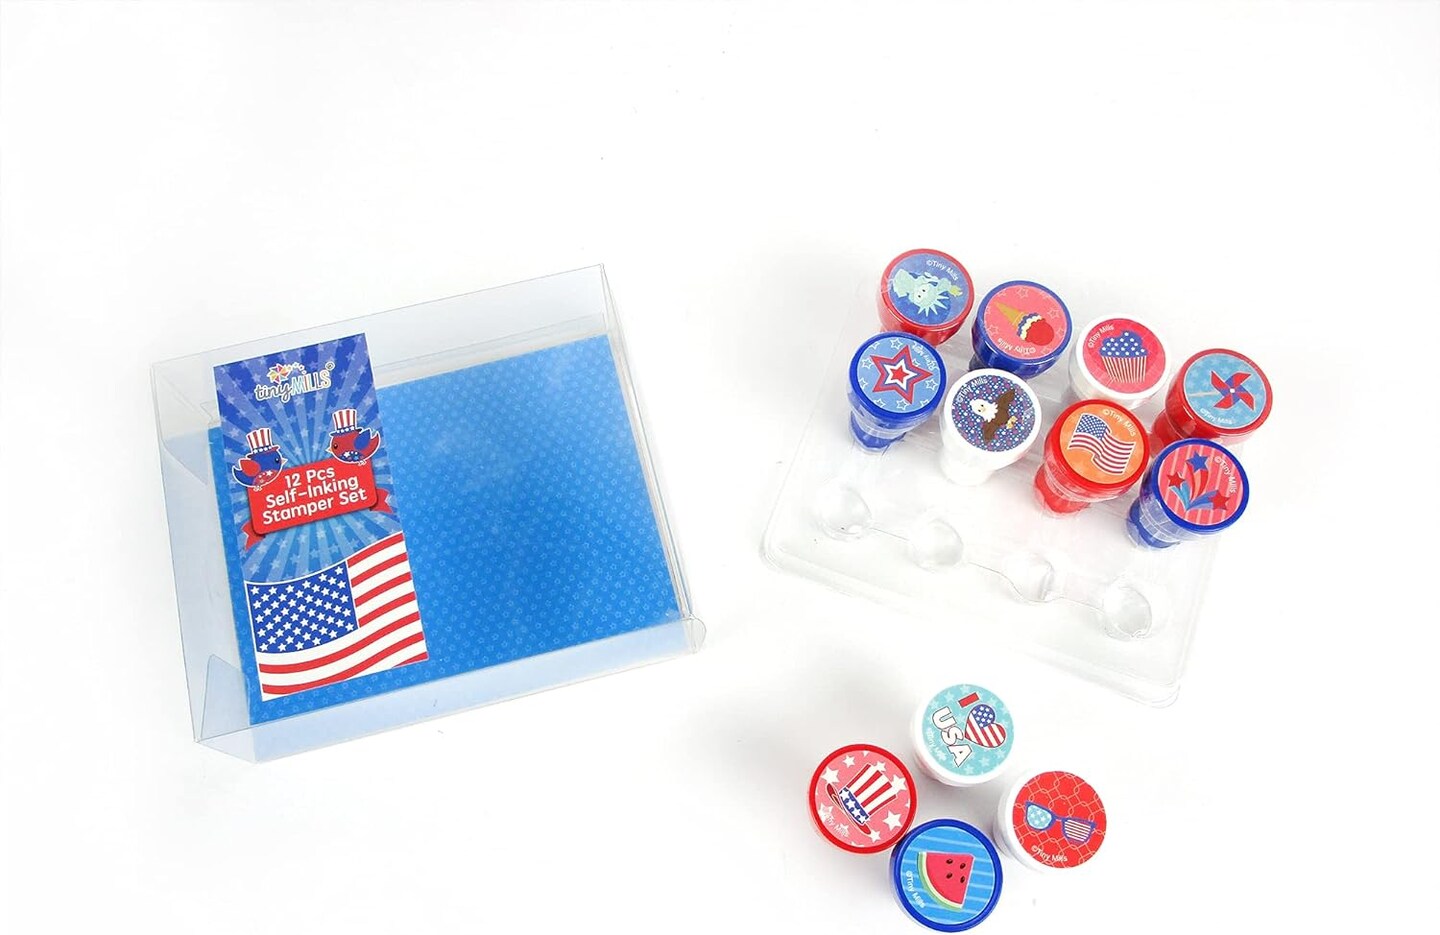 TINYMILLS 12 Pcs Patriotic I Love USA America 4th of July Stamp Kit